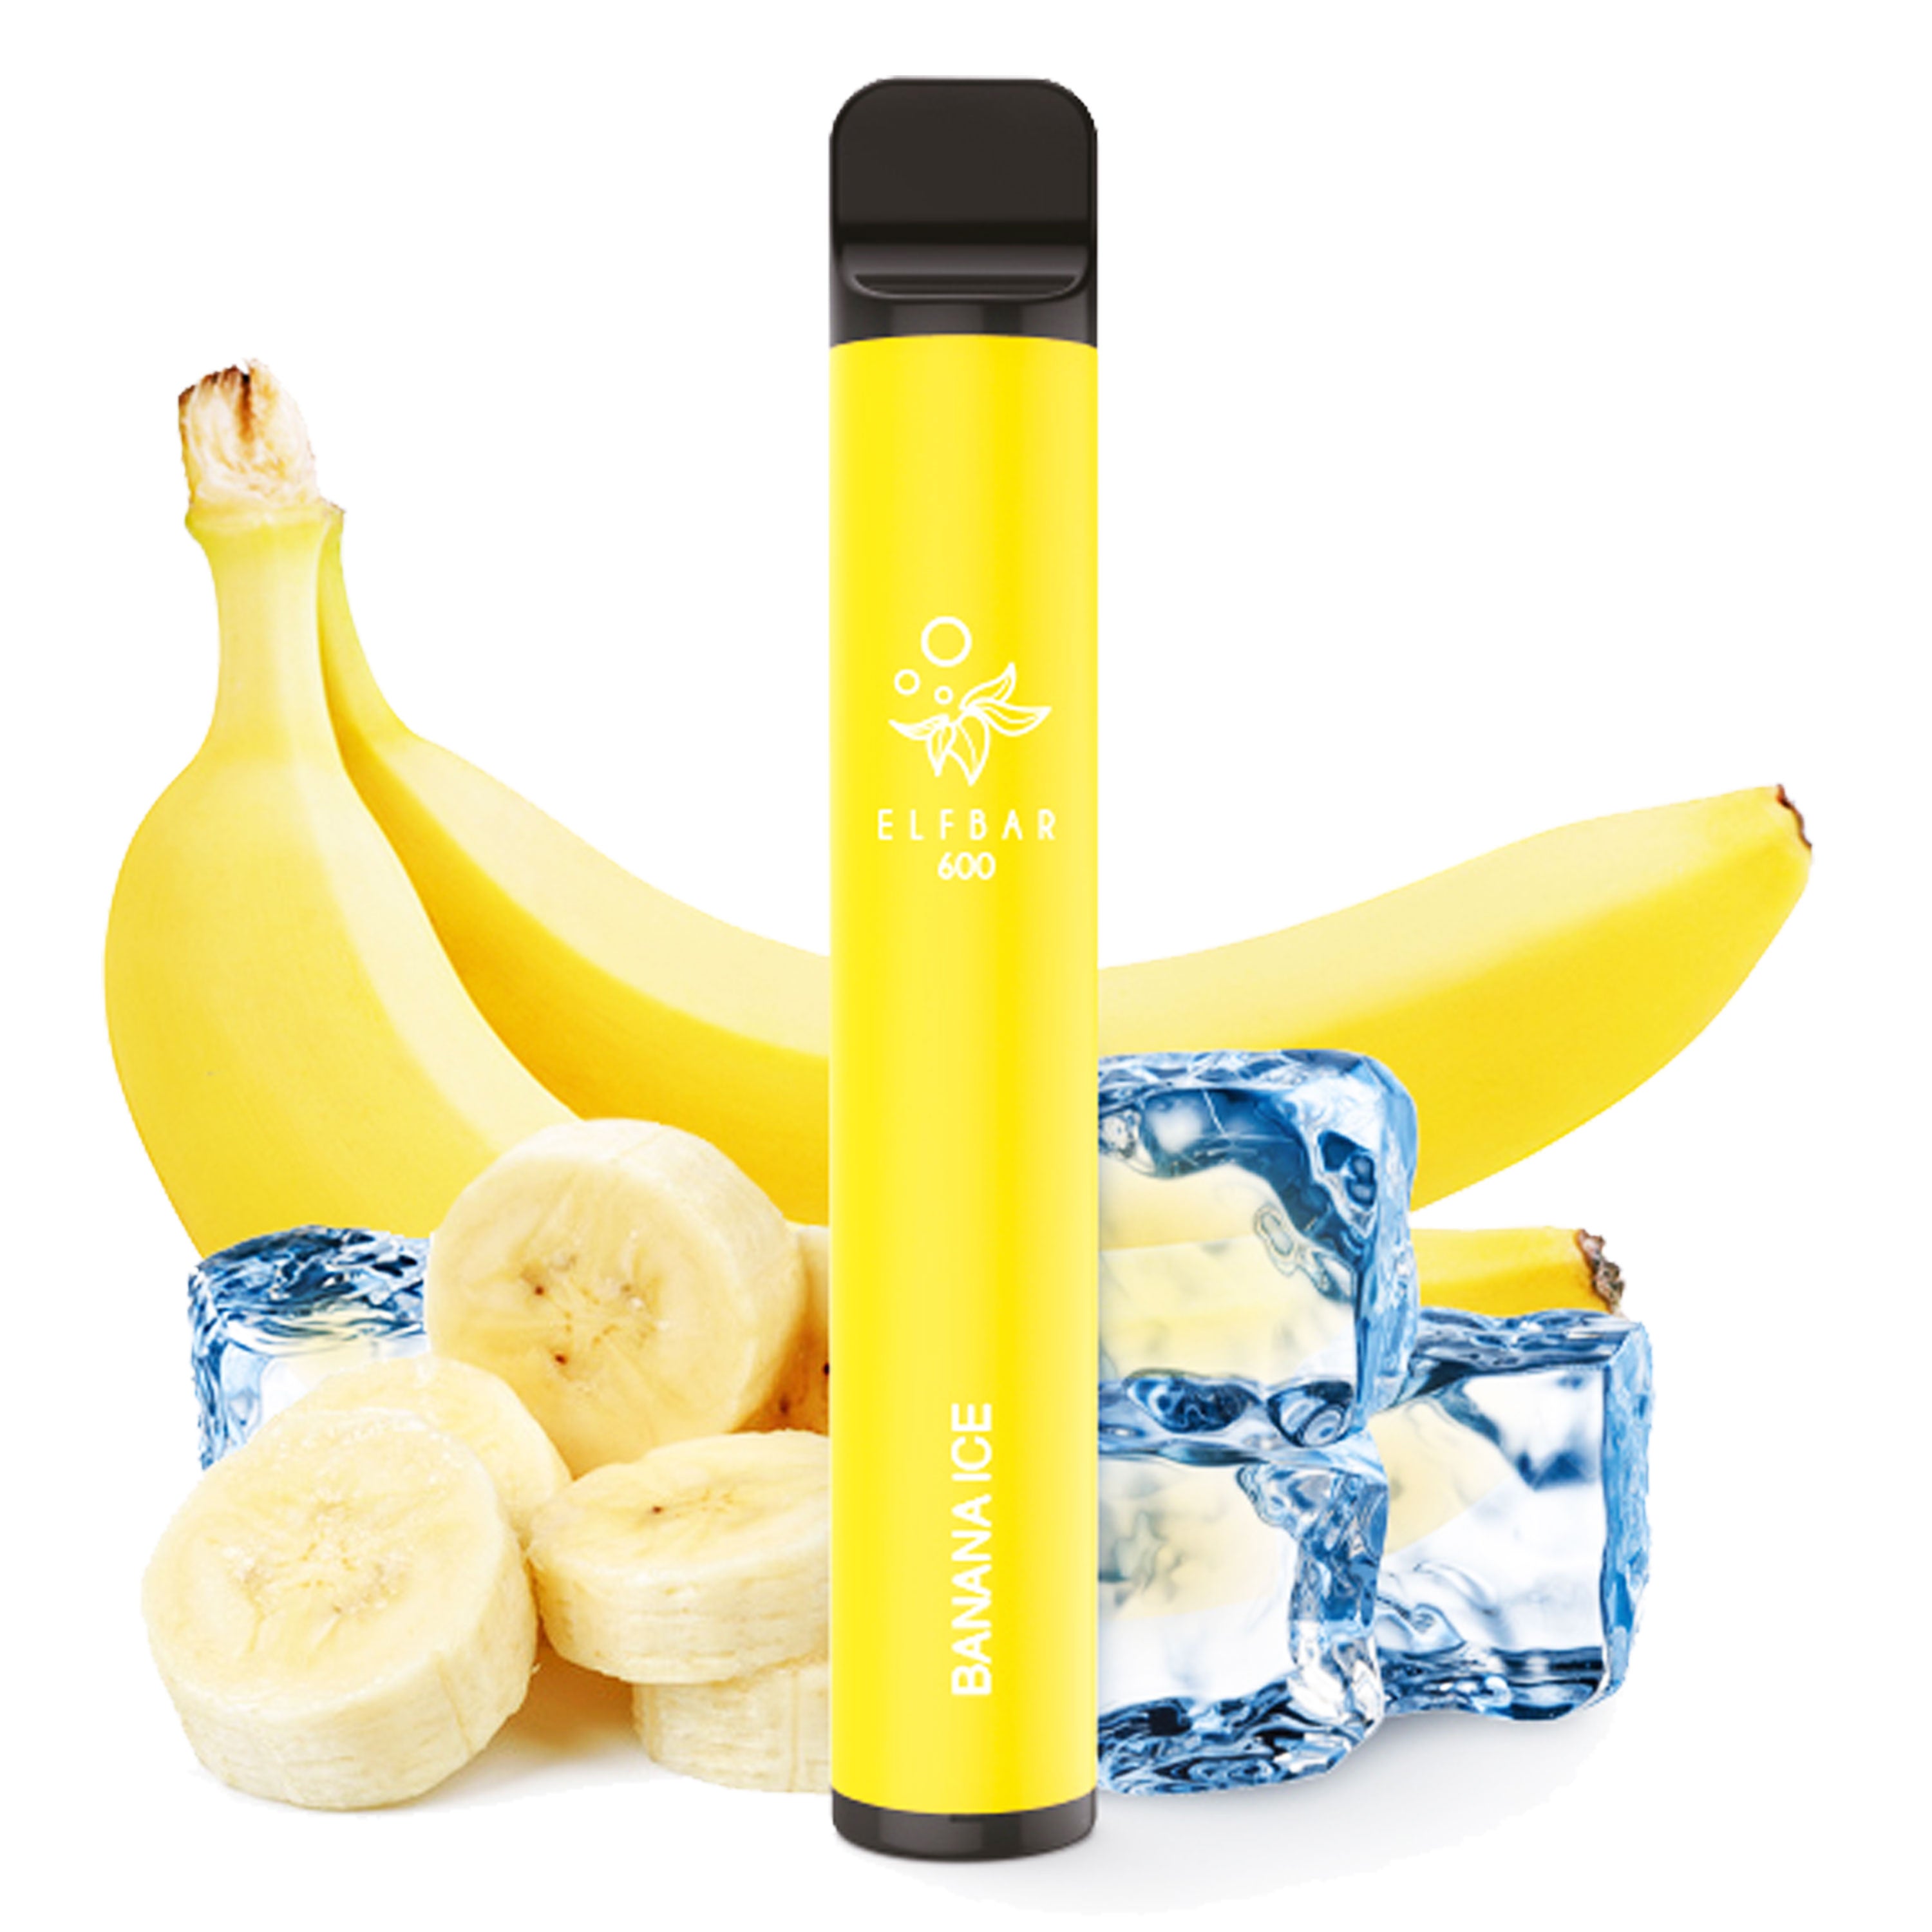 Elfbar - 600 - Banana Ice (2 ml) 600 Züge 20mg/ml - Einweg E-Zigarette